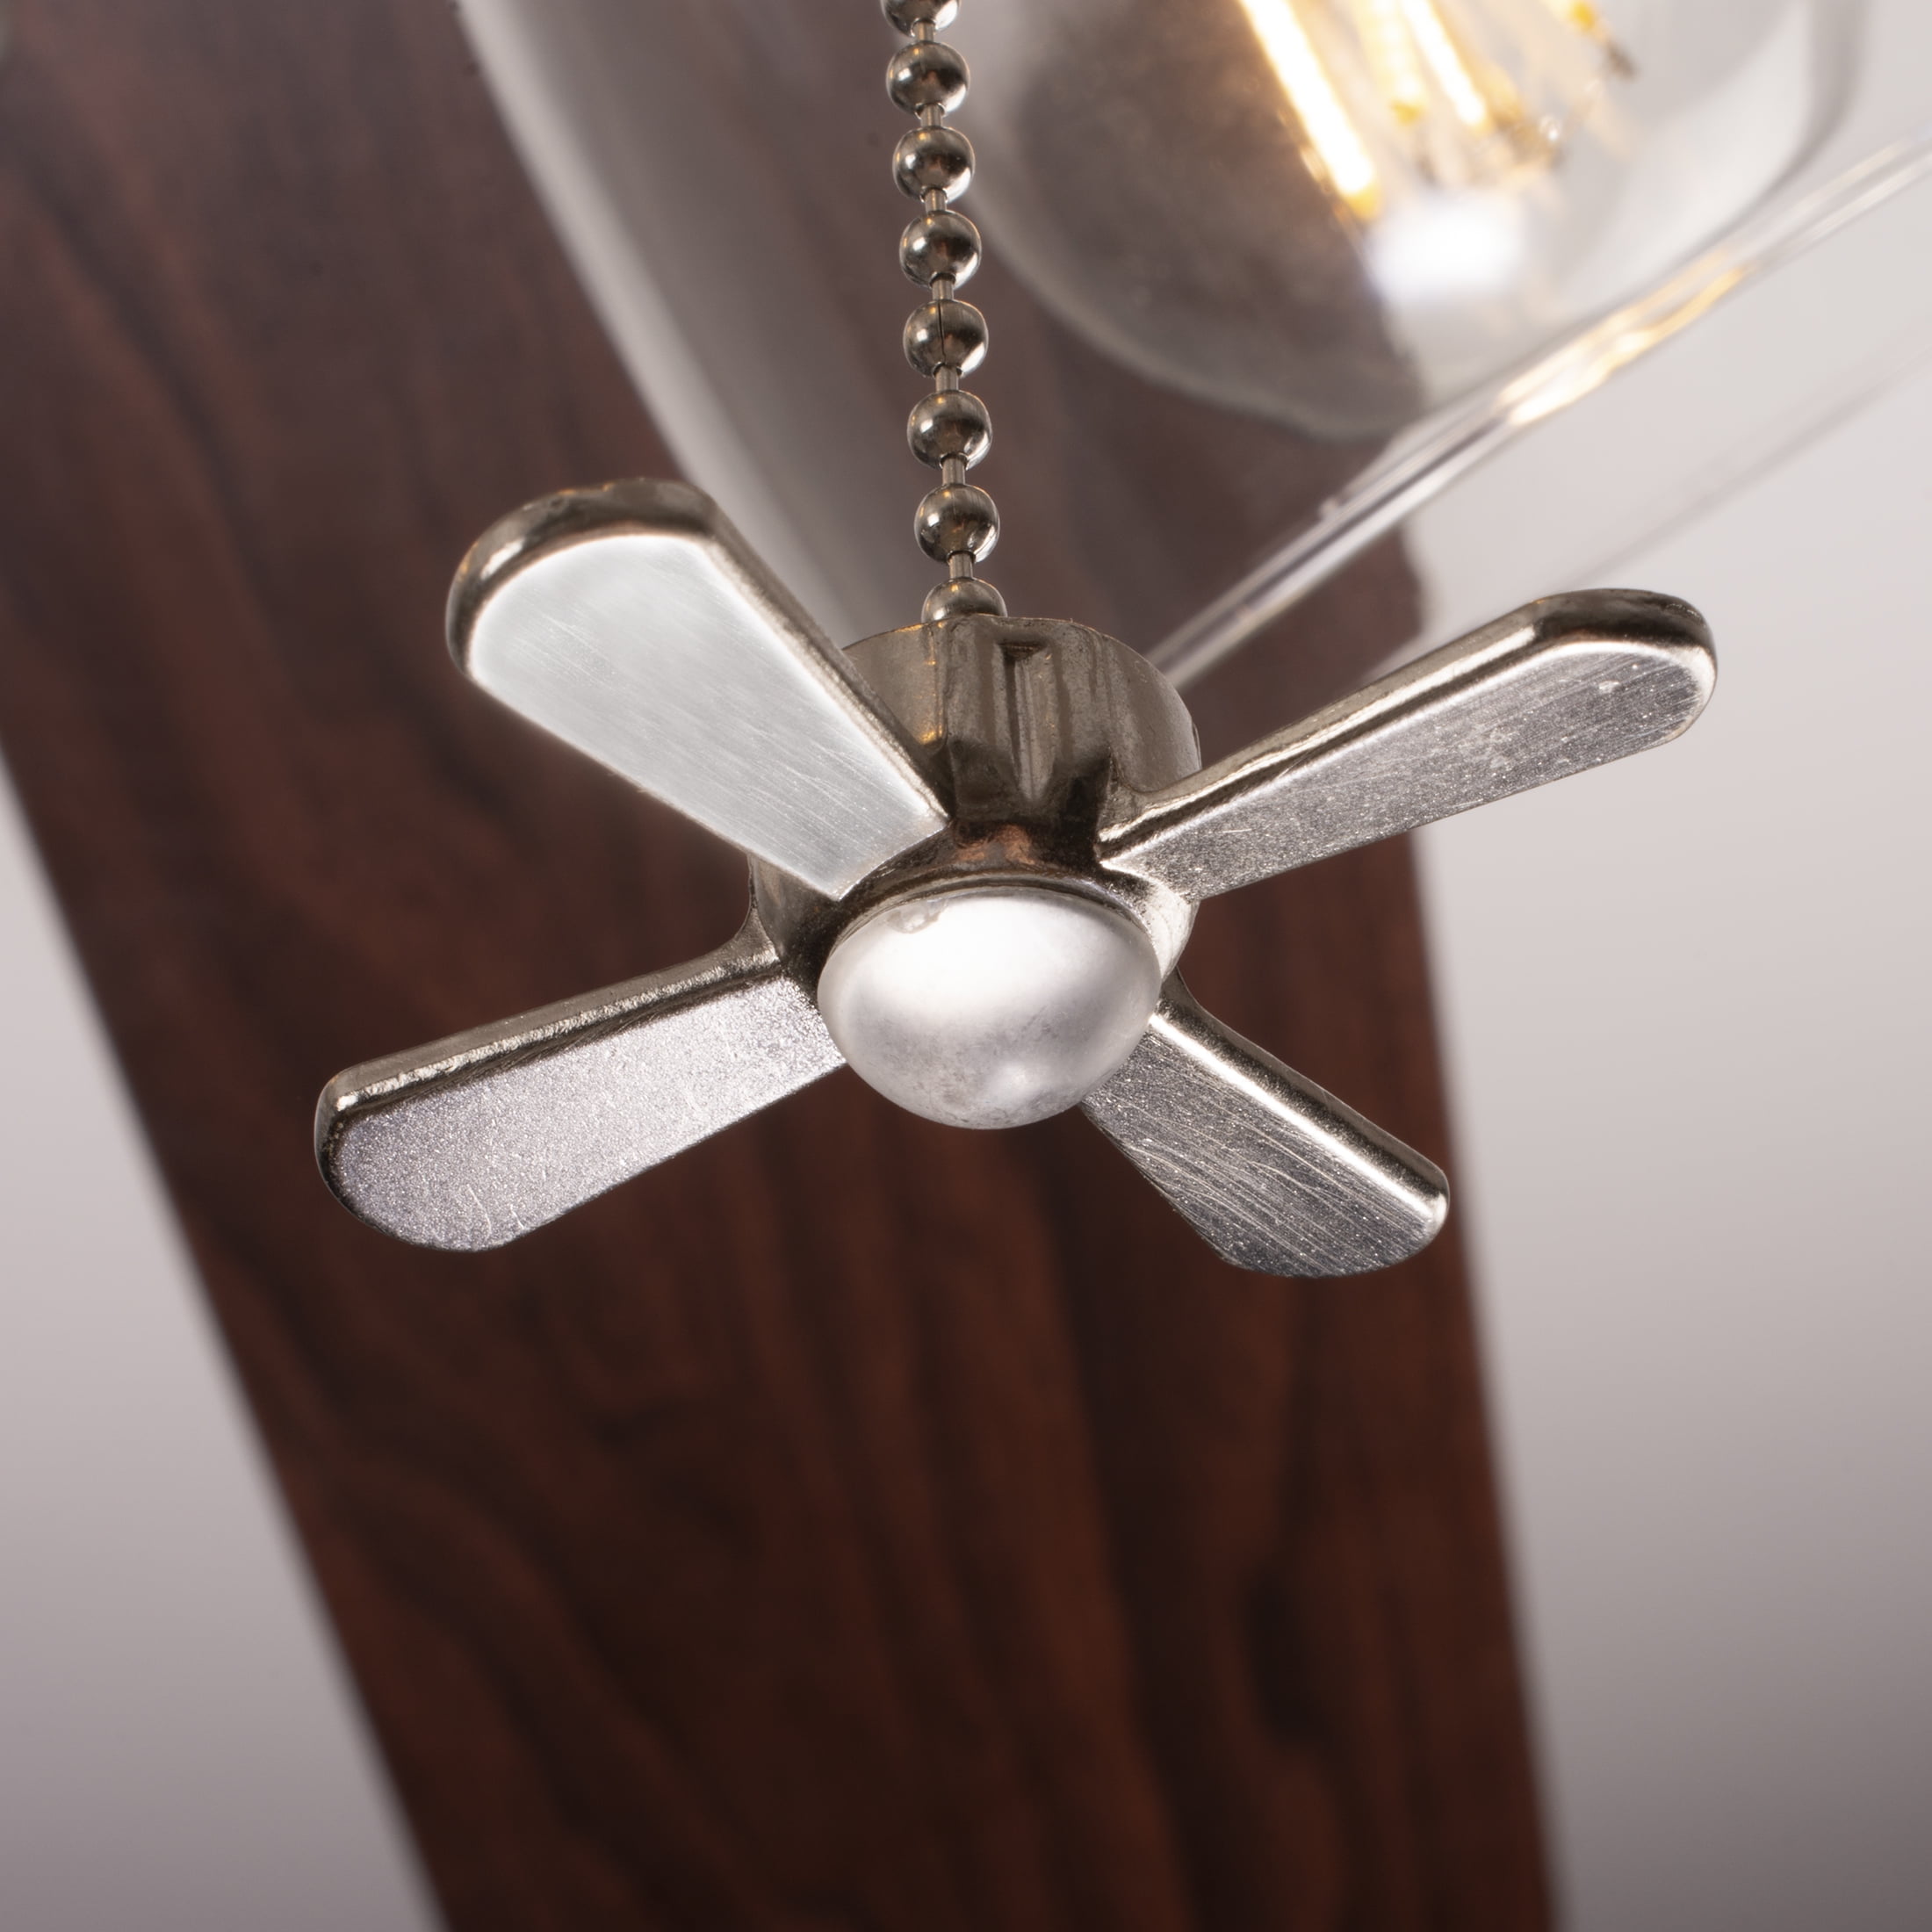 Wayilea Ceiling Fan and Light Pulls Chain, Stainless Steel